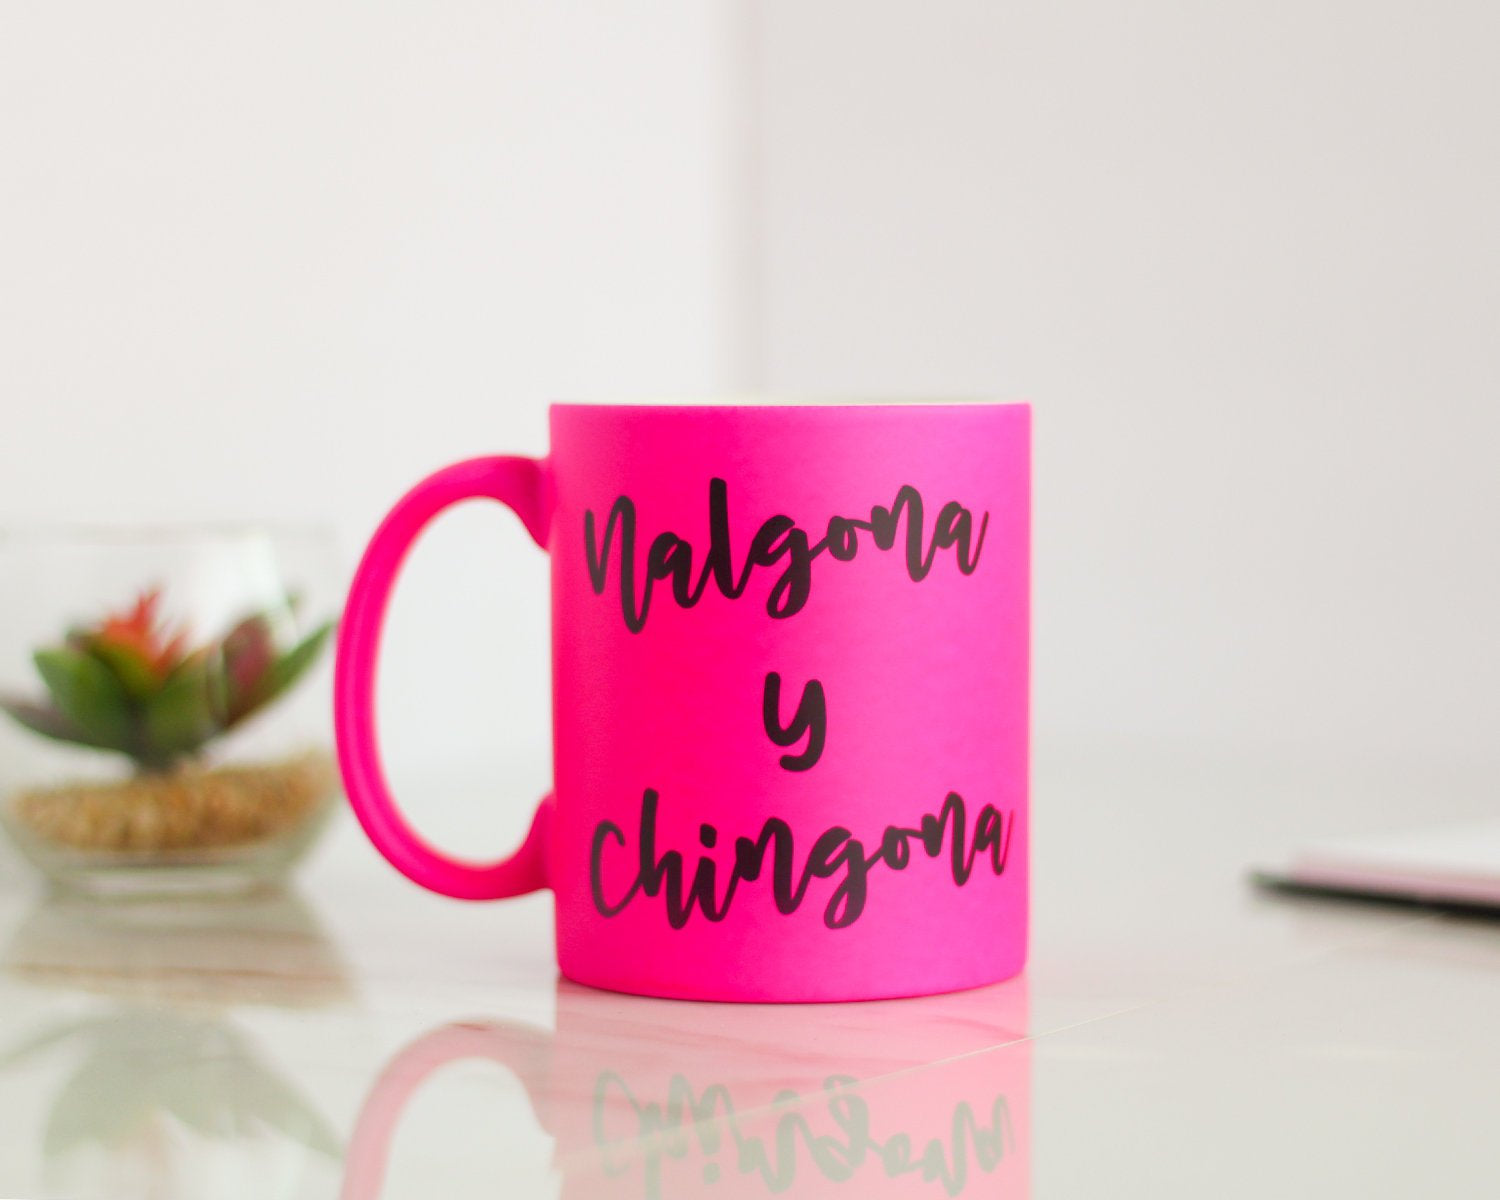 Nalgona y Chingona Coffee Mug